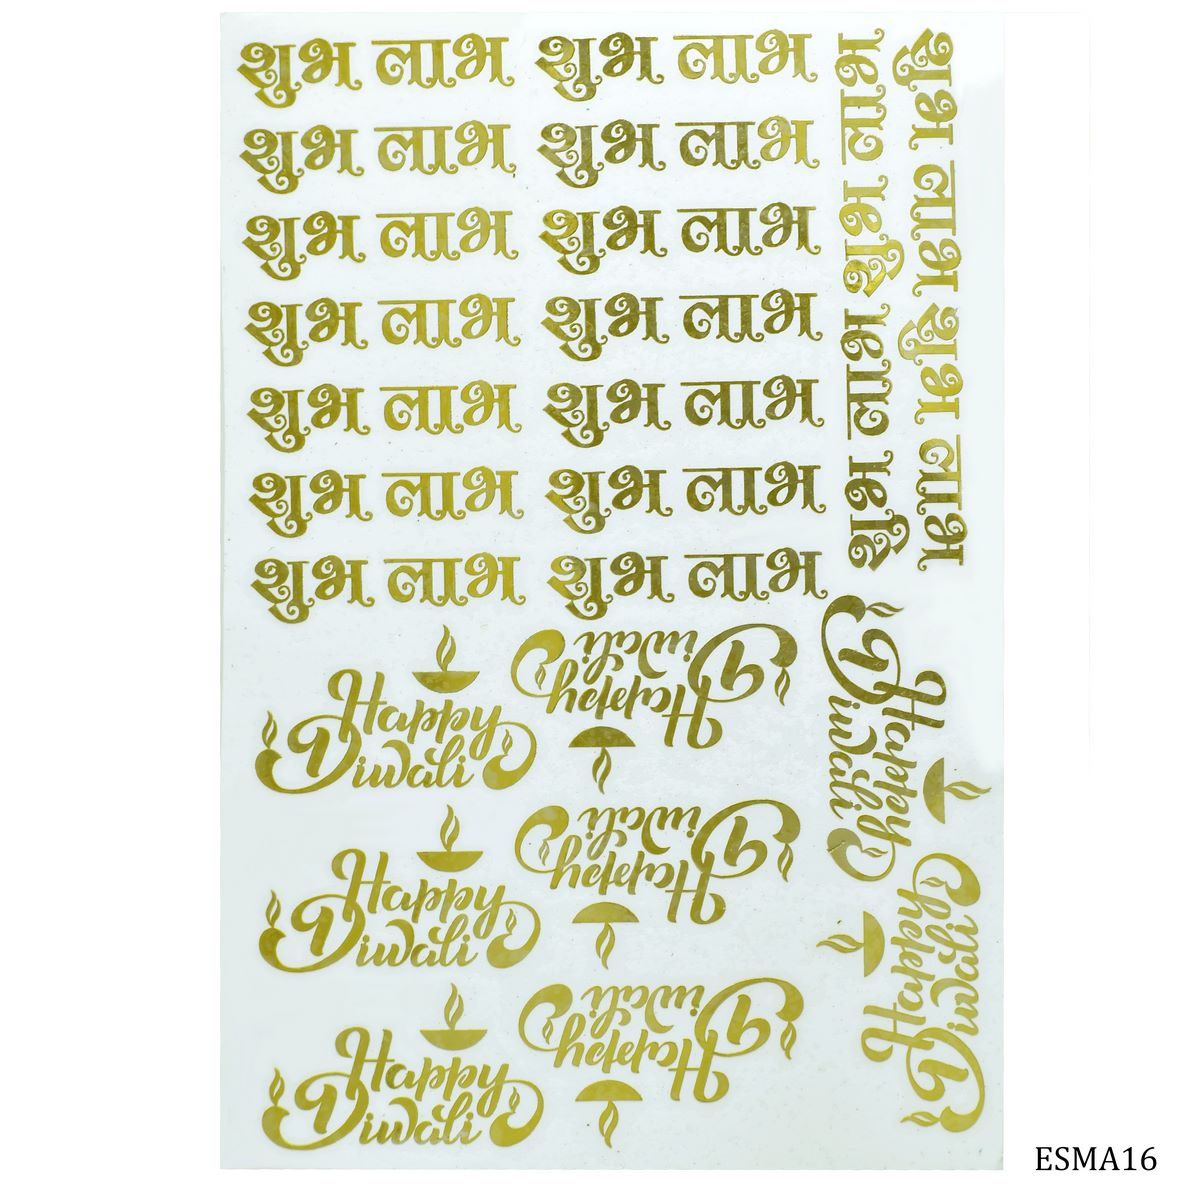 jags-mumbai Door Sticker EP Sticker Metal Shubh Labh Happy Diwali